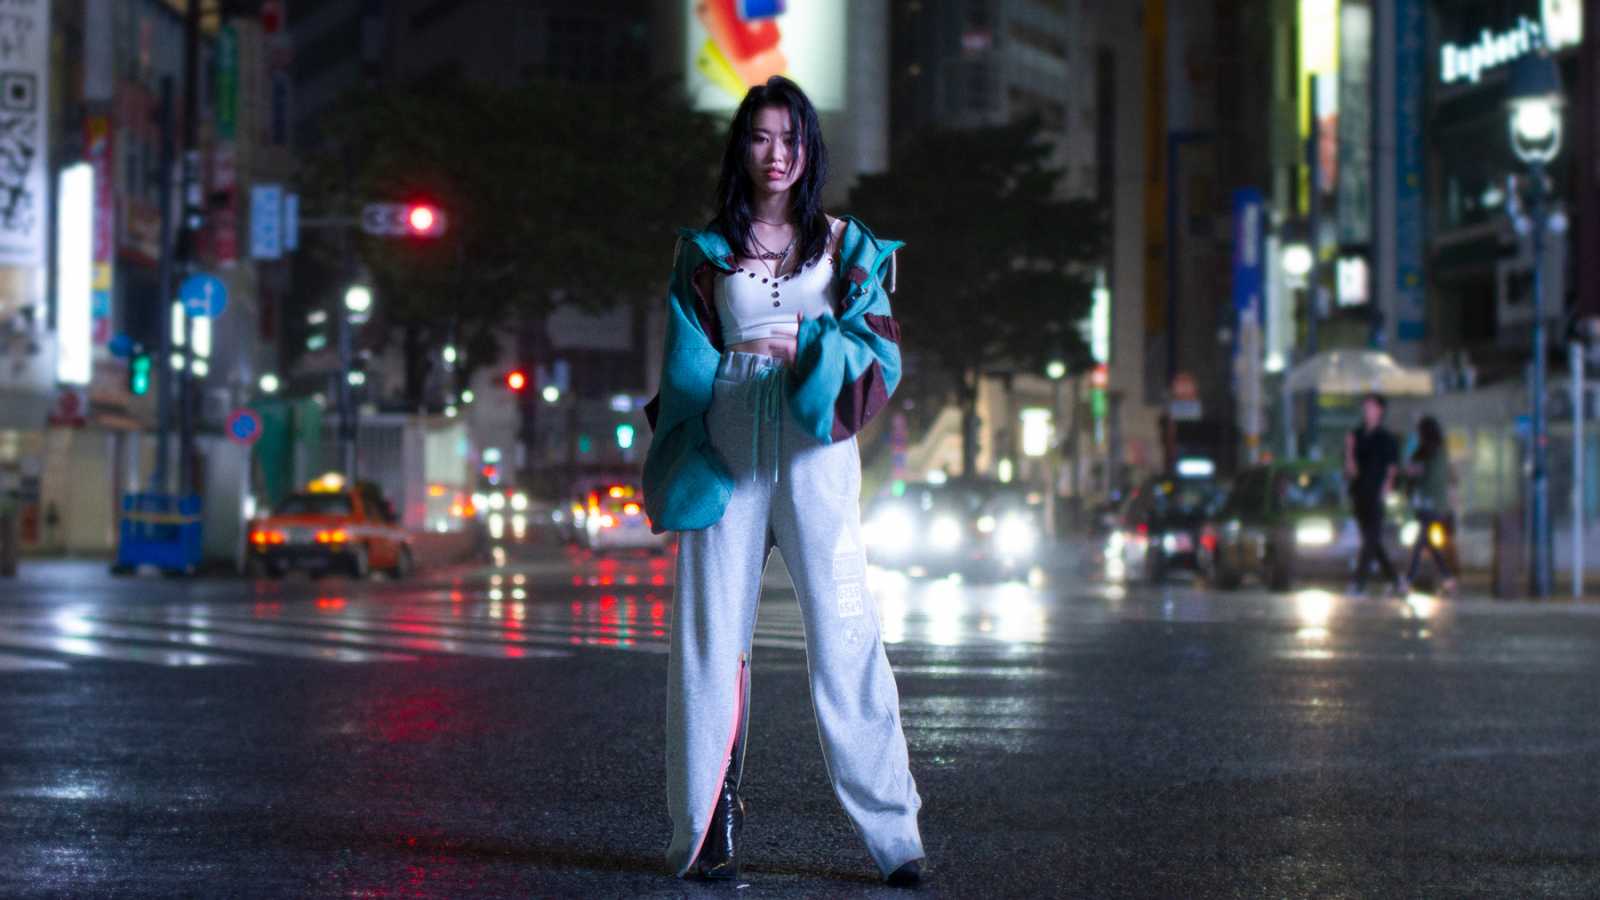 MIREI to Make Her International Debut with "Take Me Away" © MIREI, courtesy of Cool Japan Music